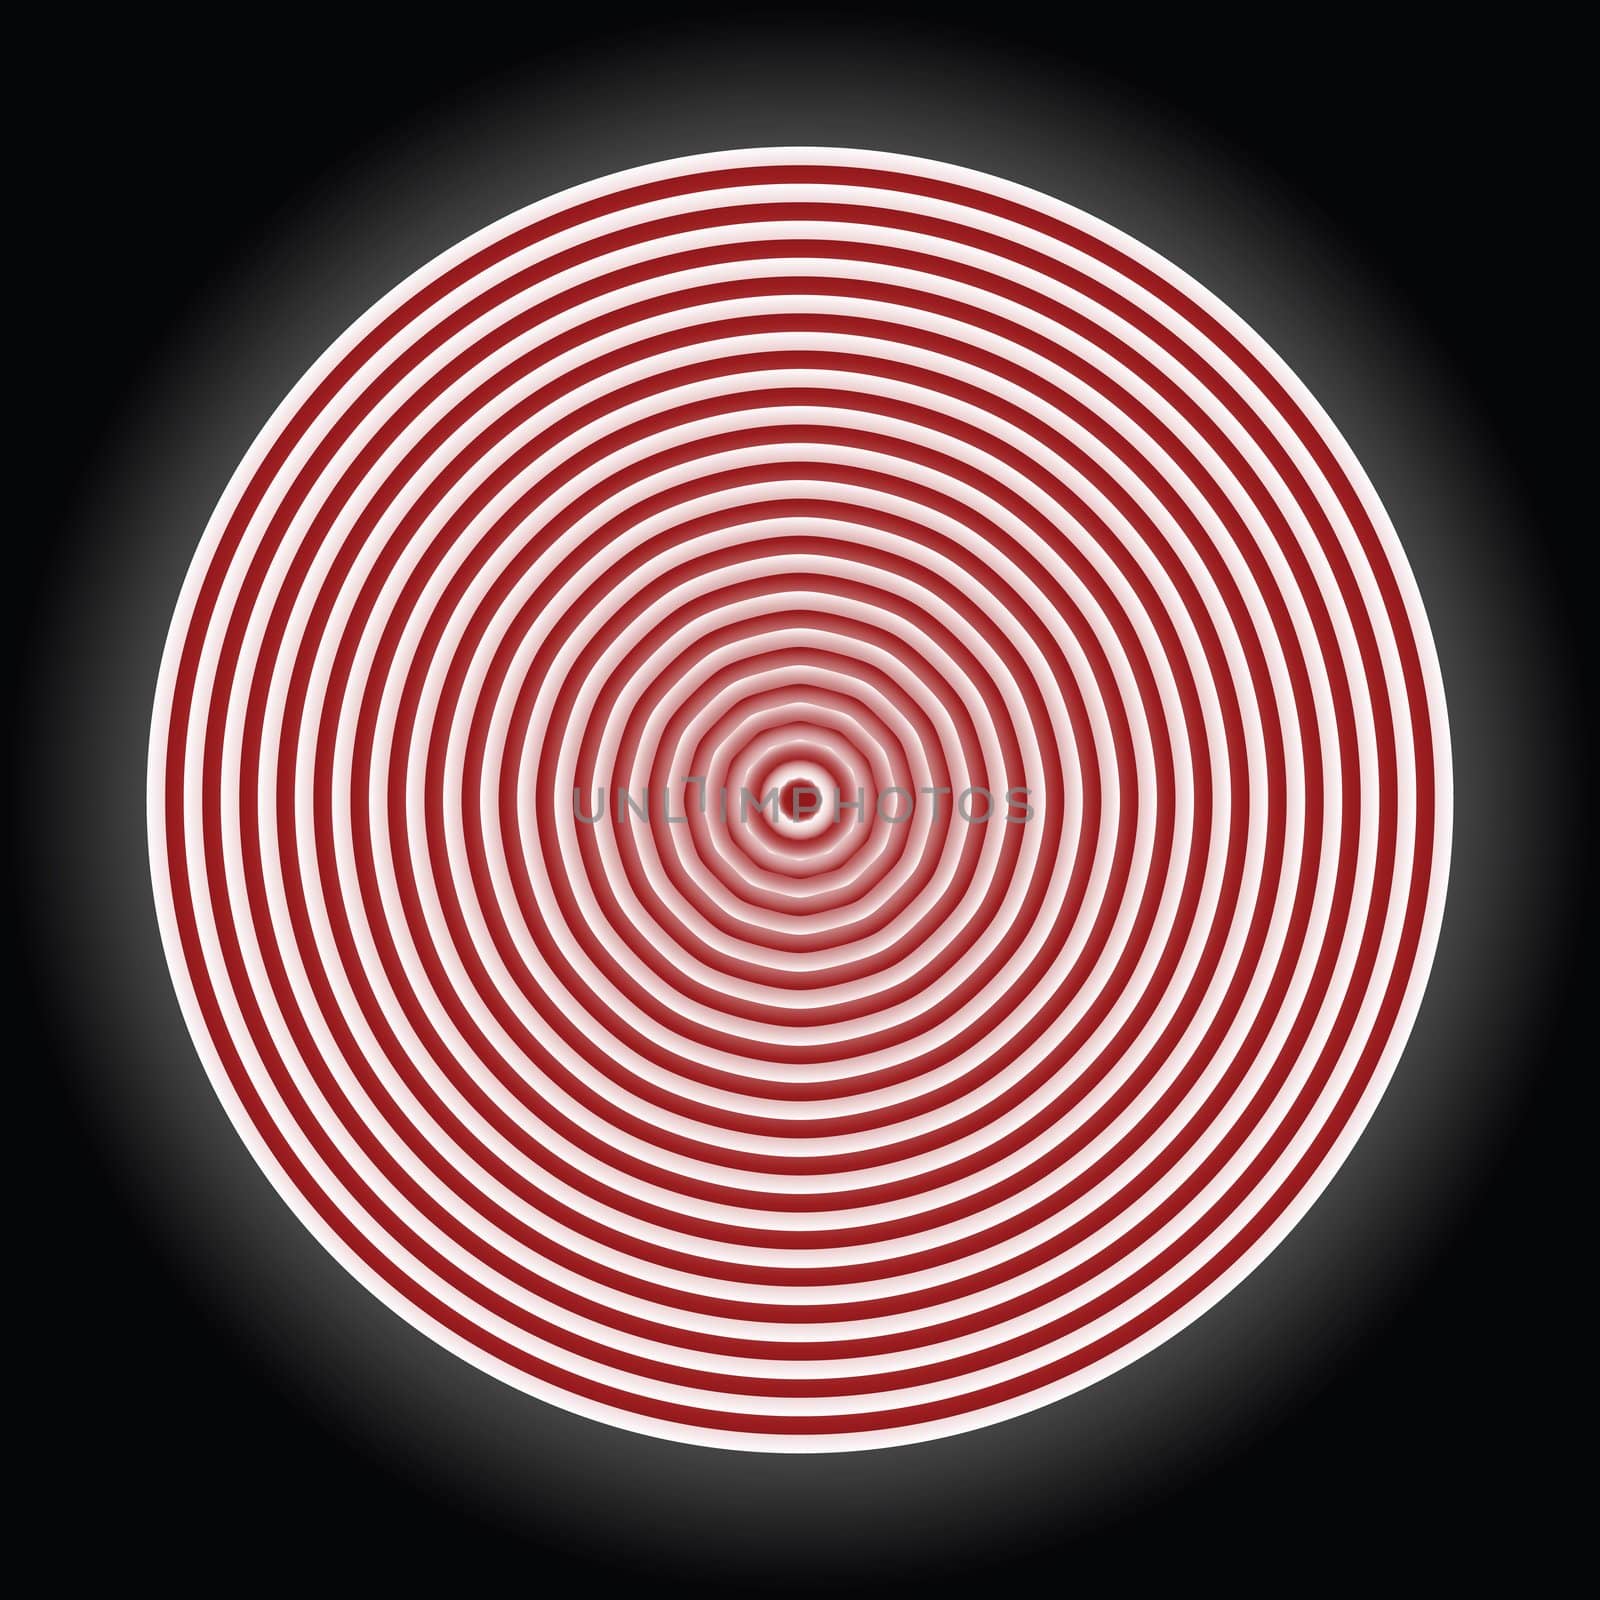 stylized red target, vector art illustration